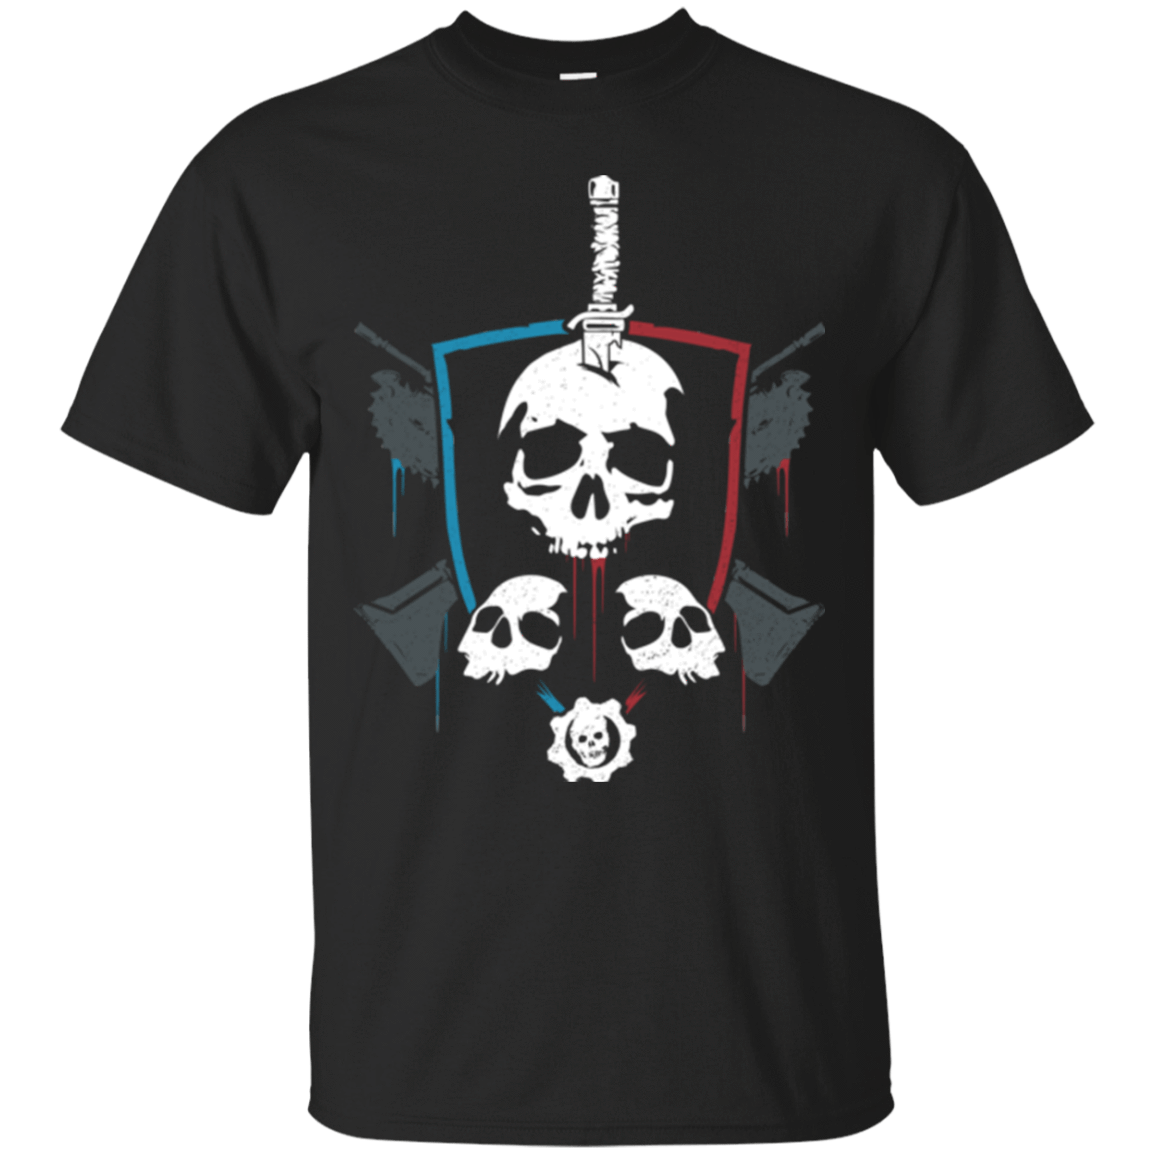 T-Shirts Black / Small Gears of War 4 Crest T-Shirt